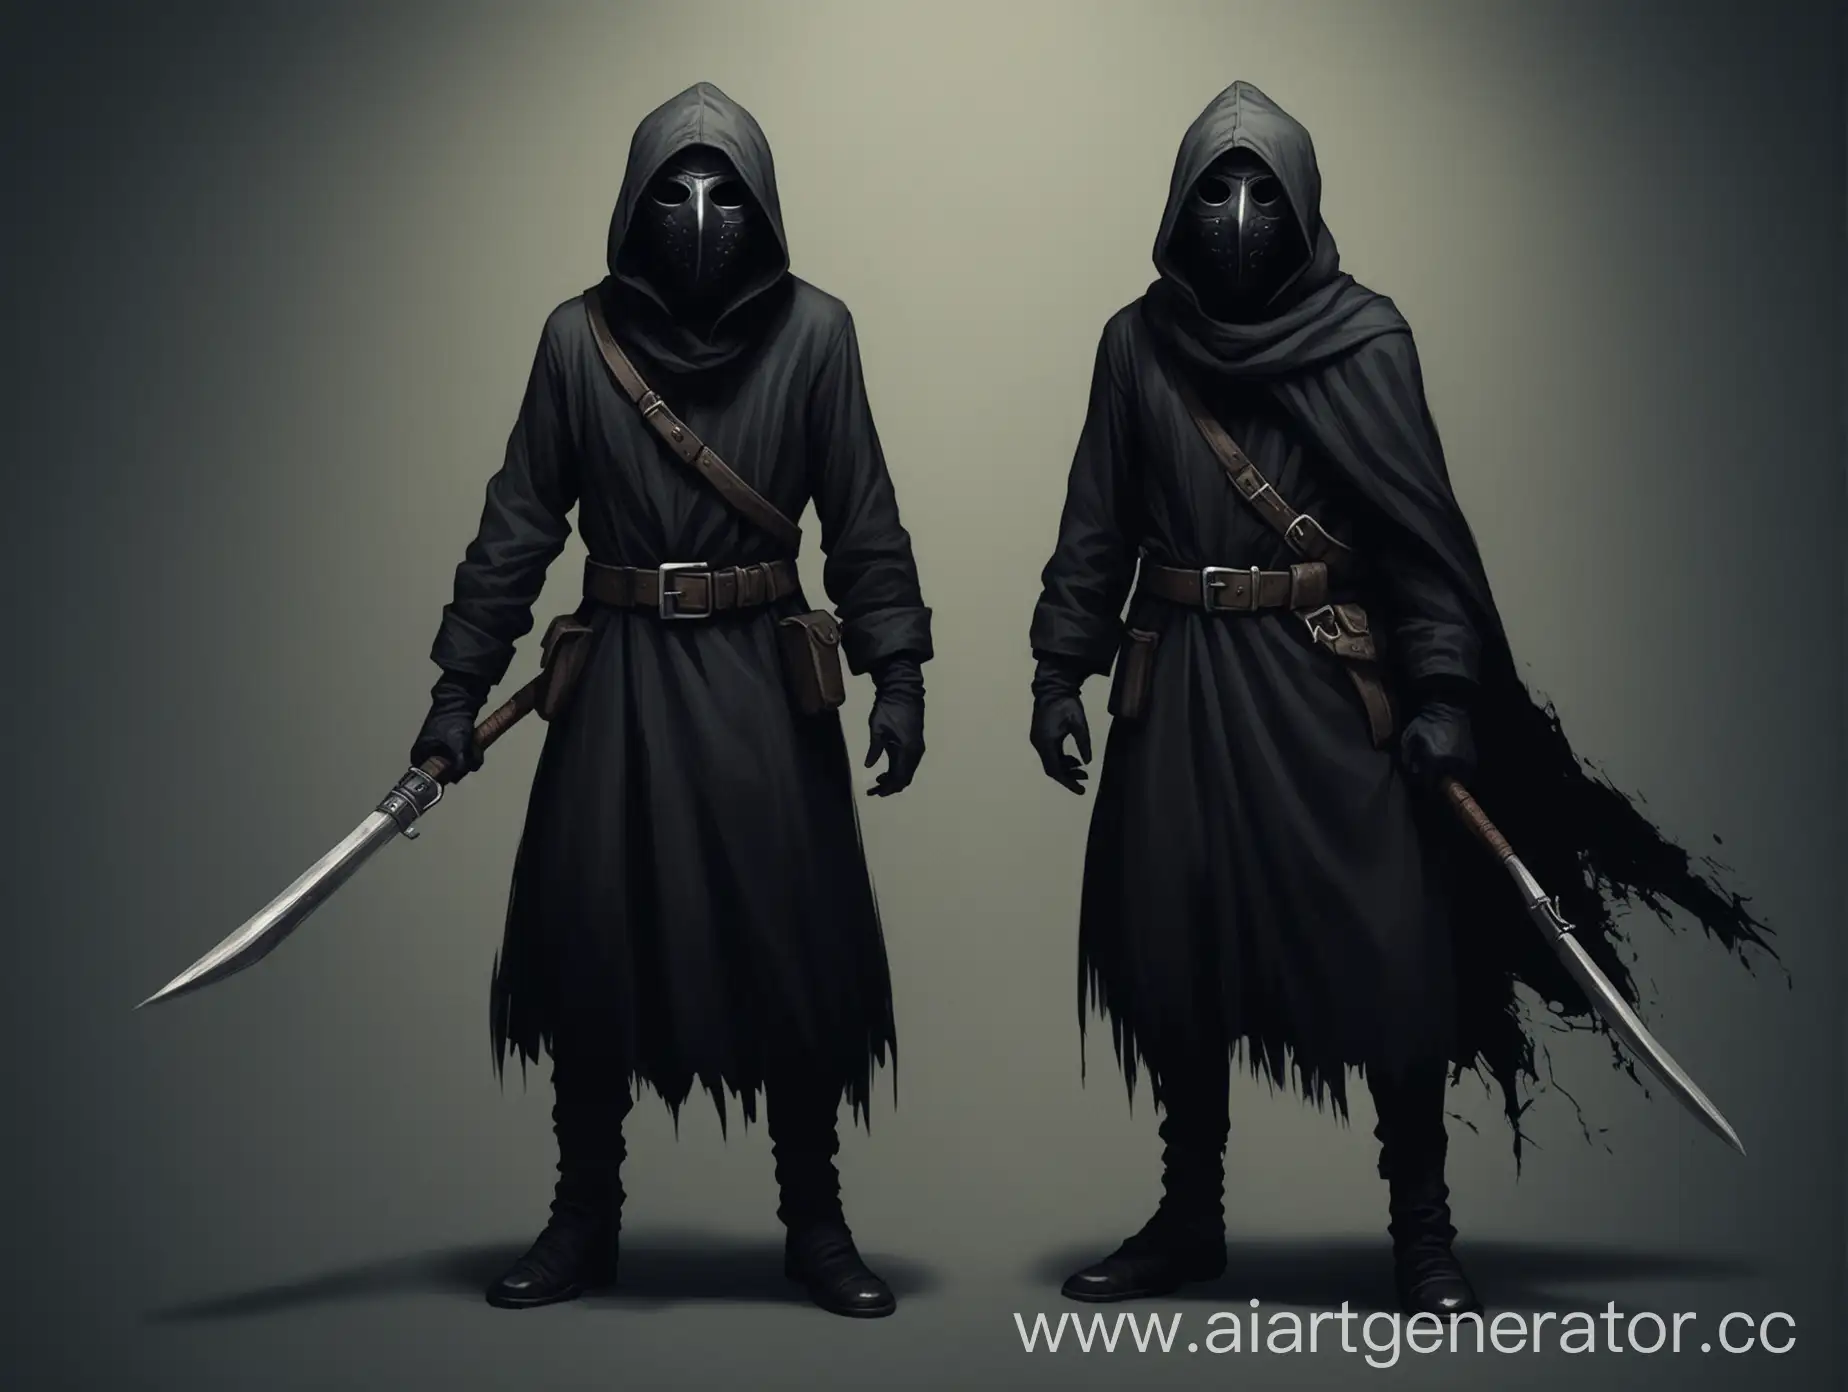 Mysterious-Figure-Dark-Robber-in-FullLength-Mask